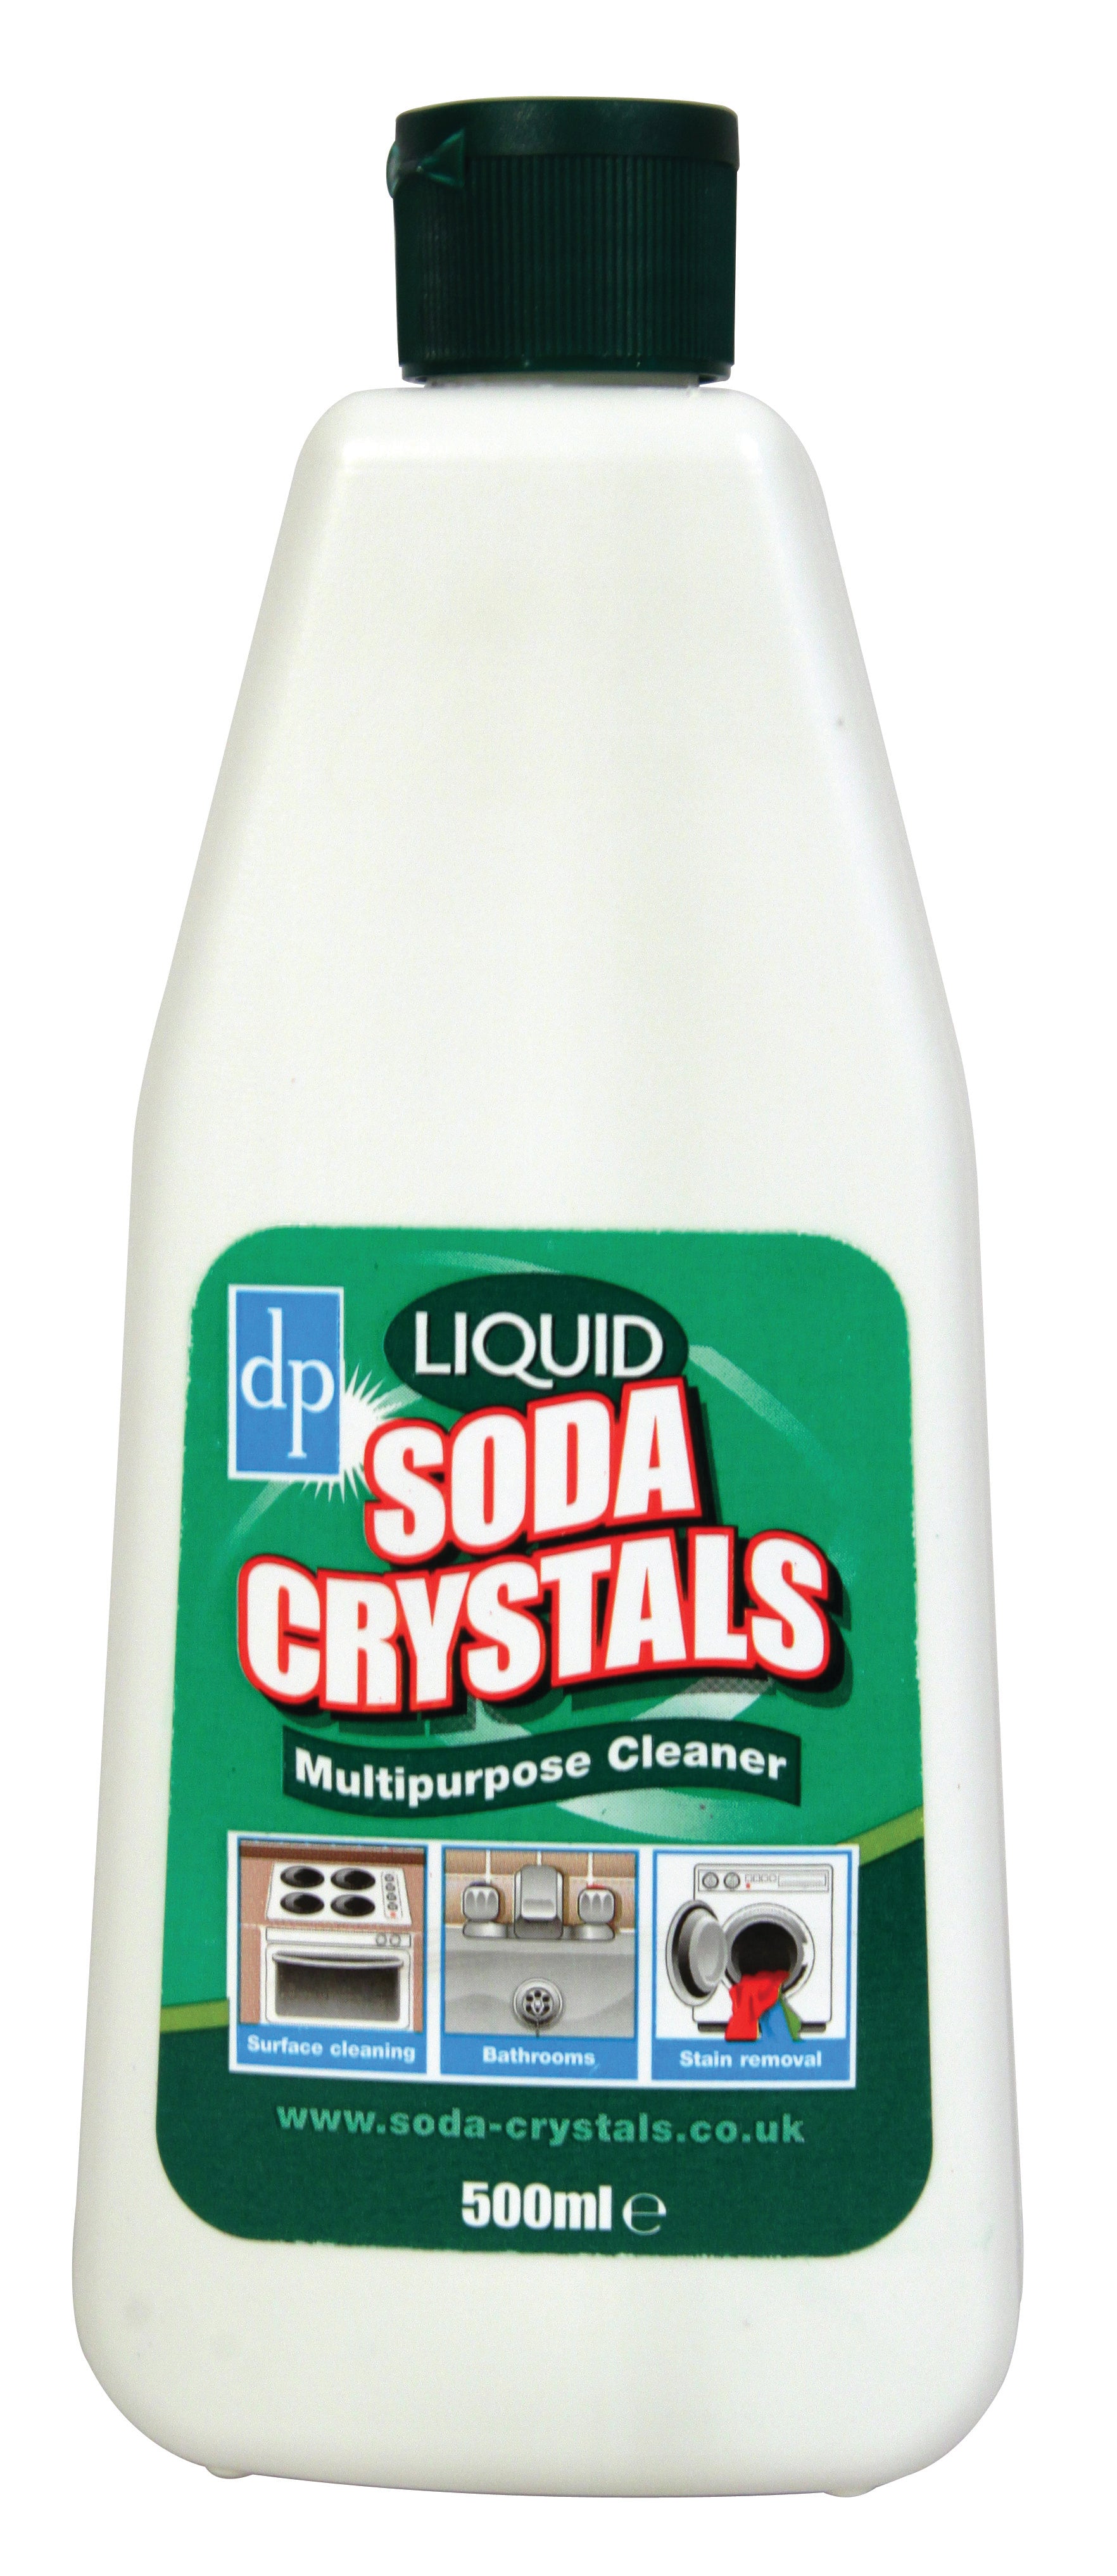 Dripak Liquid Soda Crystals 500ml - Premium Kitchen Cleaning from Dripak - Just $2.40! Shop now at W Hurst & Son (IW) Ltd